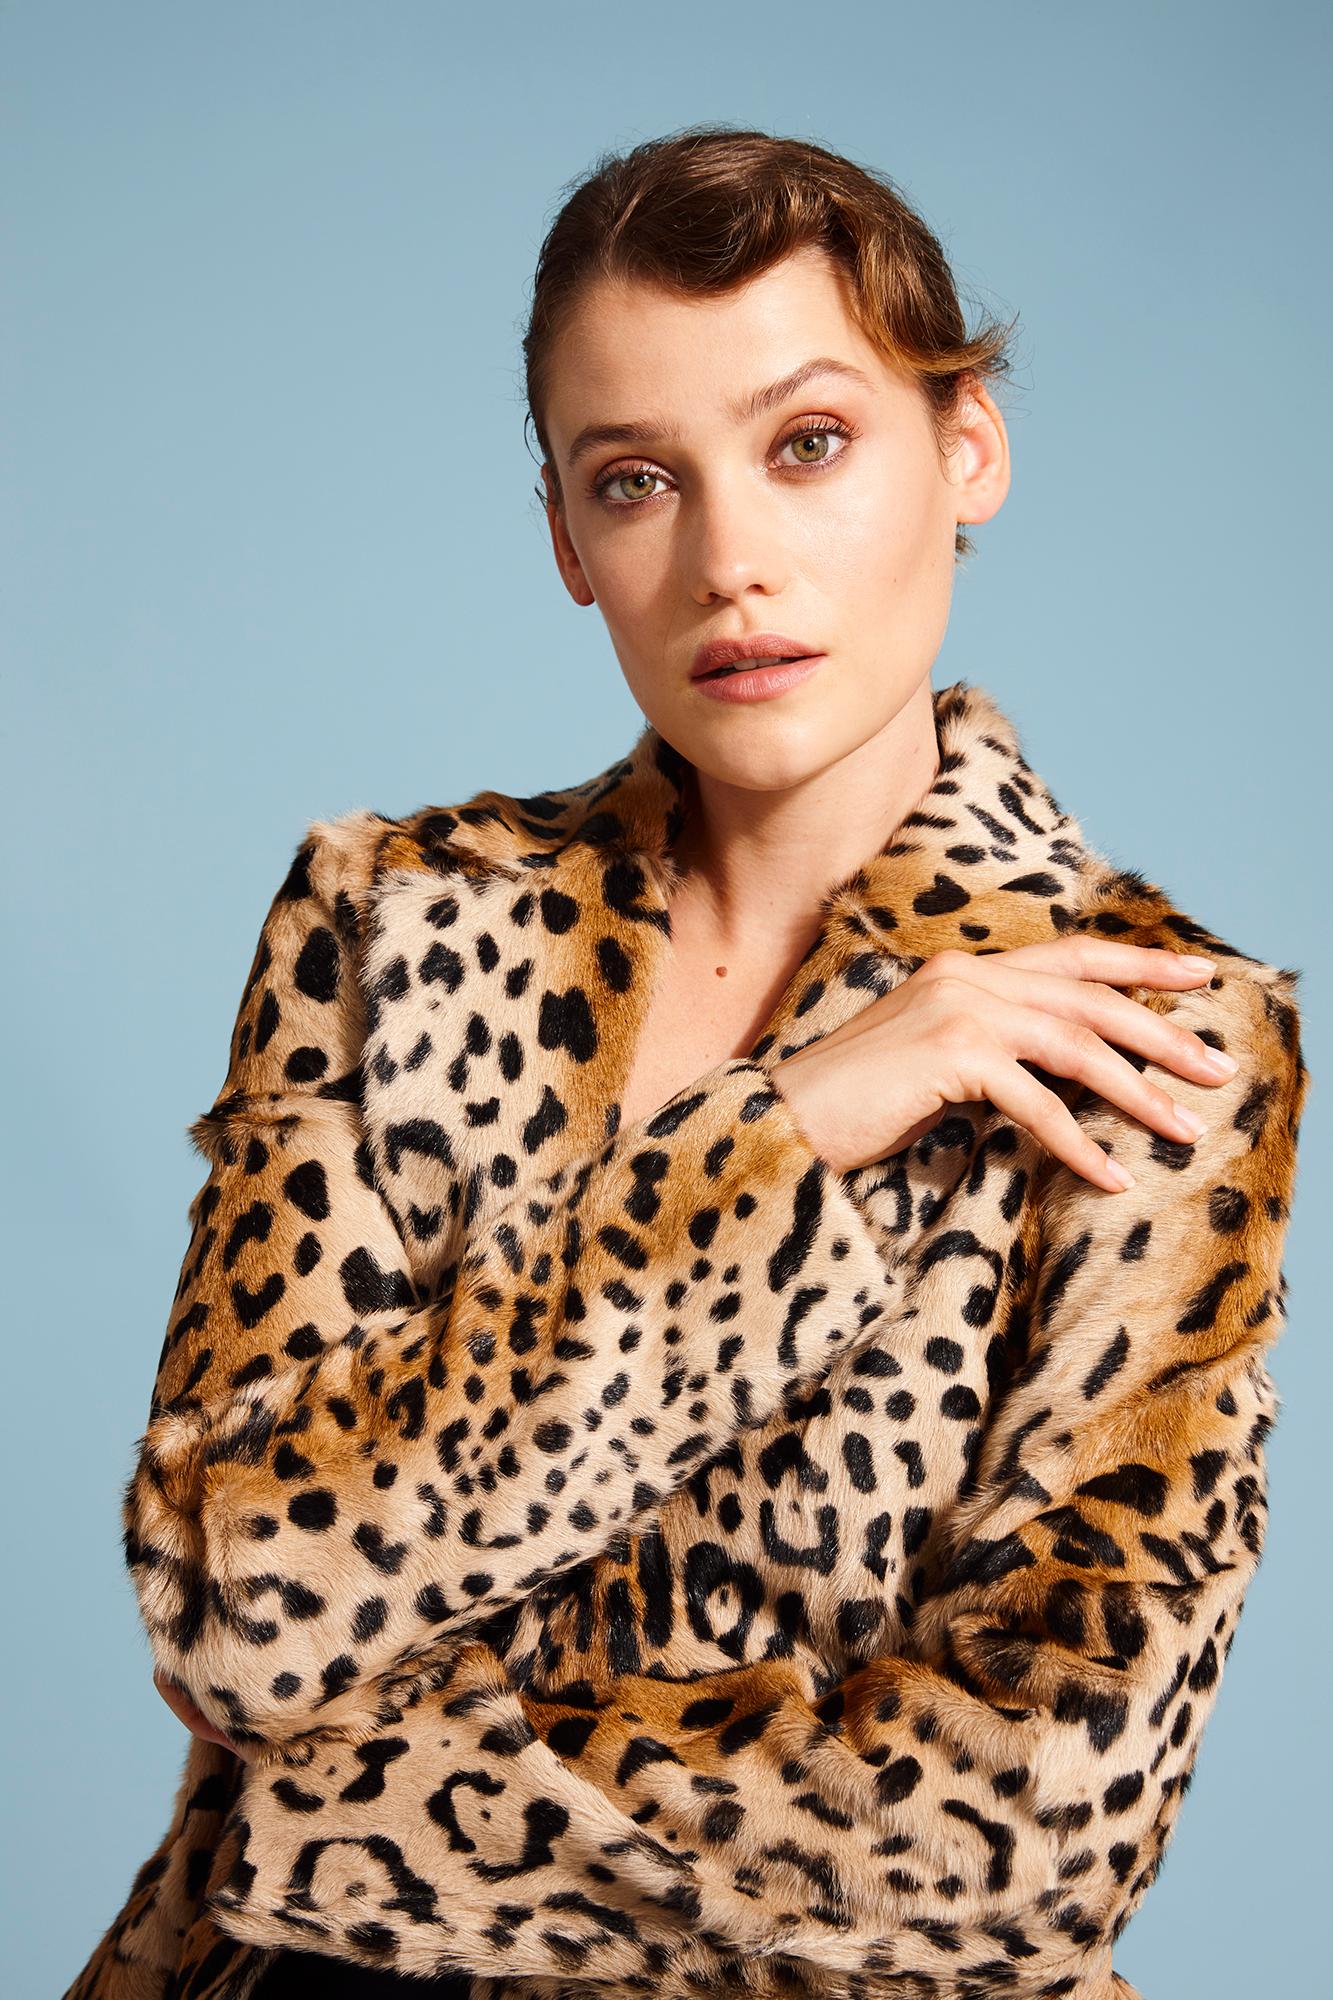 
Verheyen London Leopard Print Coat in Natural Goat Hair Fur UK 12 
RRP Price £1,695

This Leopard print coat is Verheyen London’s classic staple for effortless style and glamour. Verheyen London is a luxury brand who specialises in outerwear that